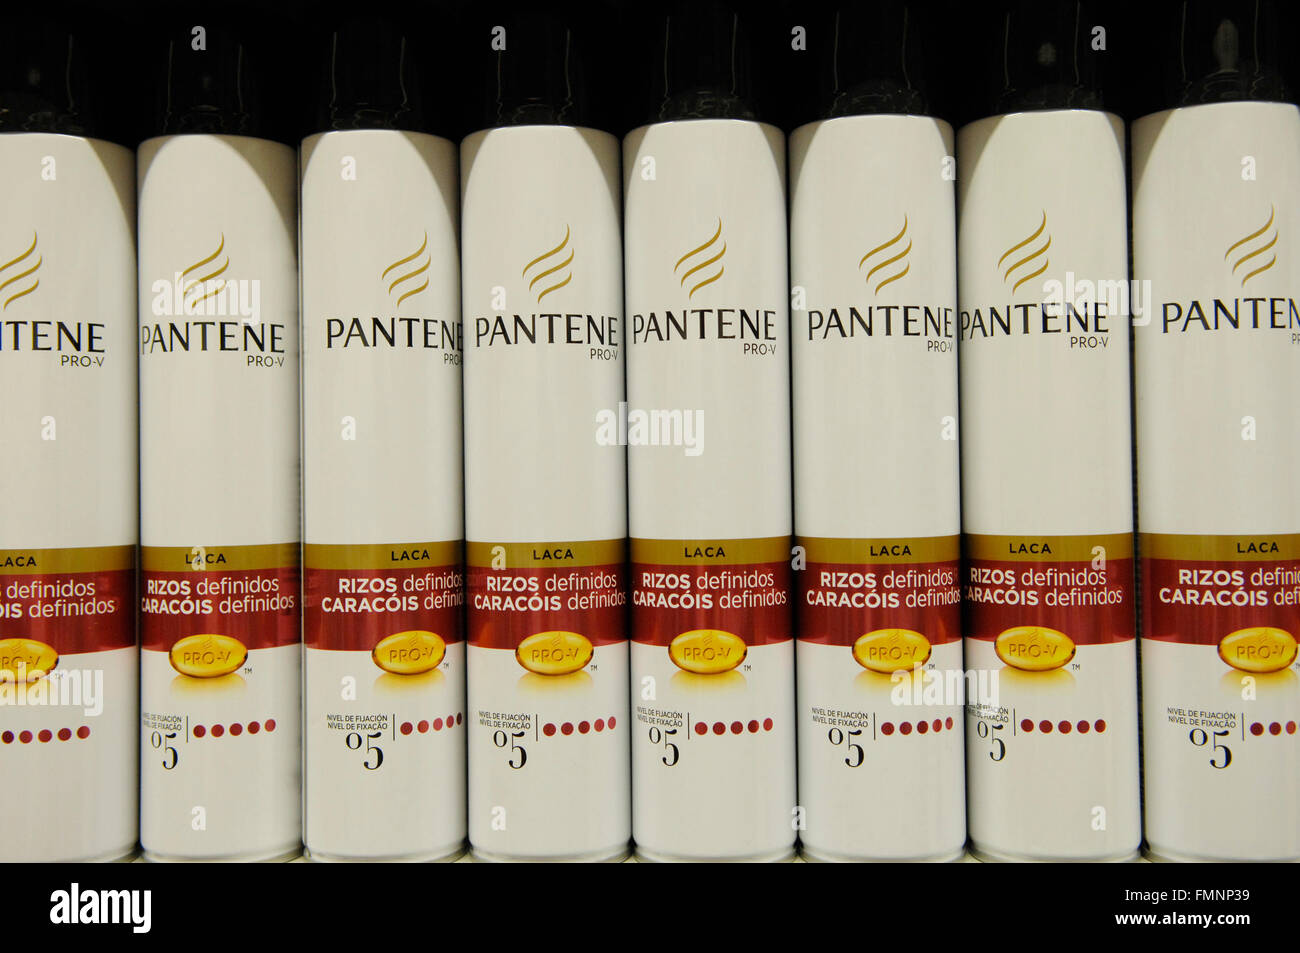 Bouteilles de shampooing Pantene à Carrefour, Malaga, Espagne Photo Stock -  Alamy